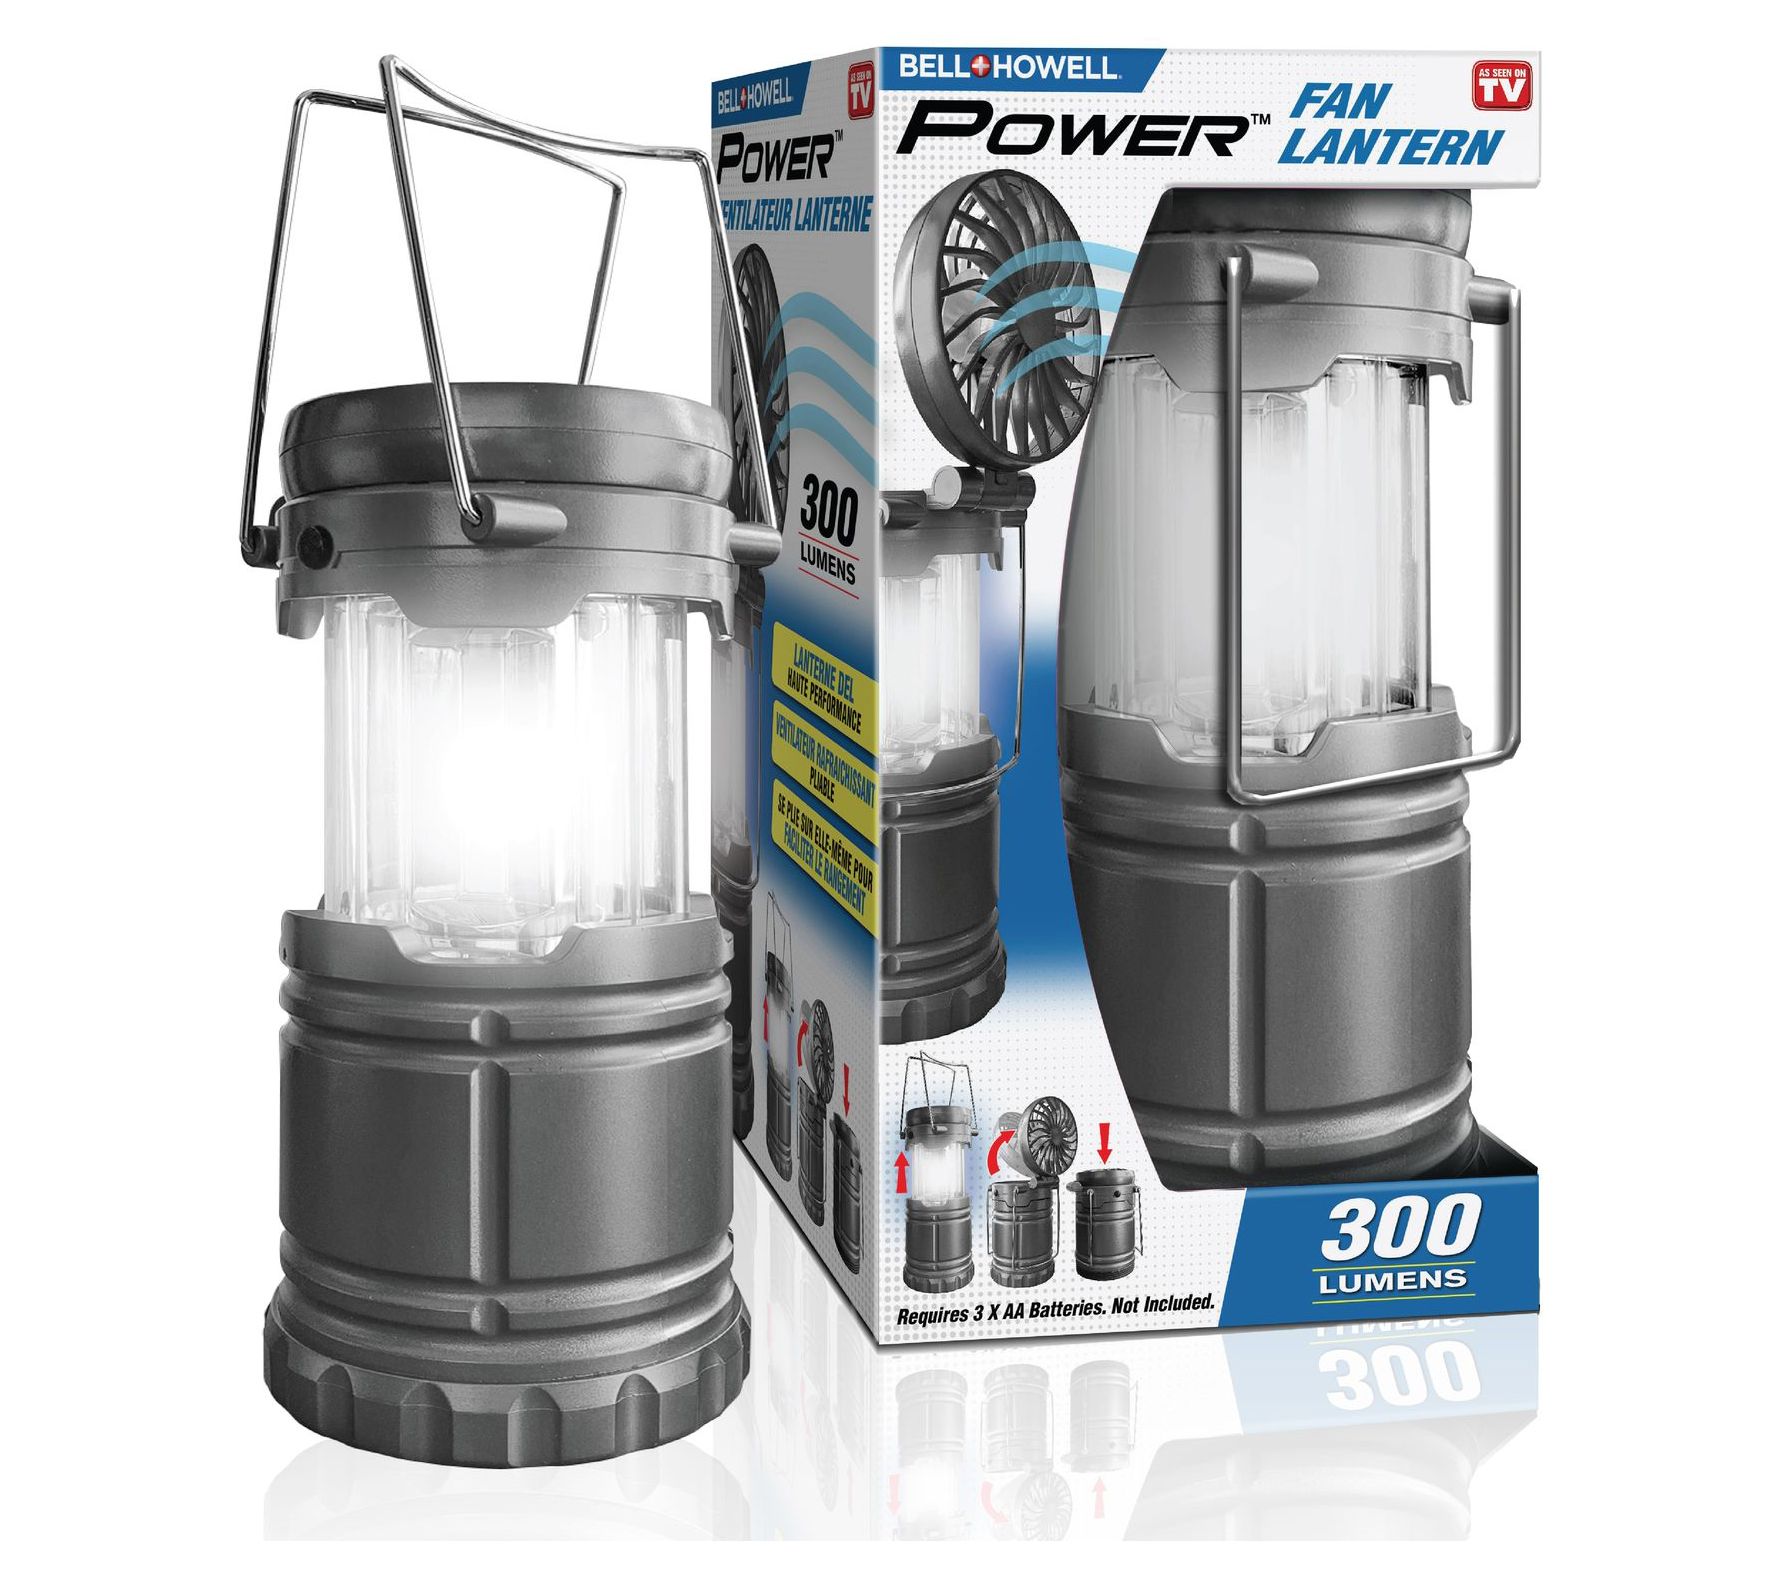 BrightEase Set of 5 Mini Lantern Flashlights with Gift Boxes 